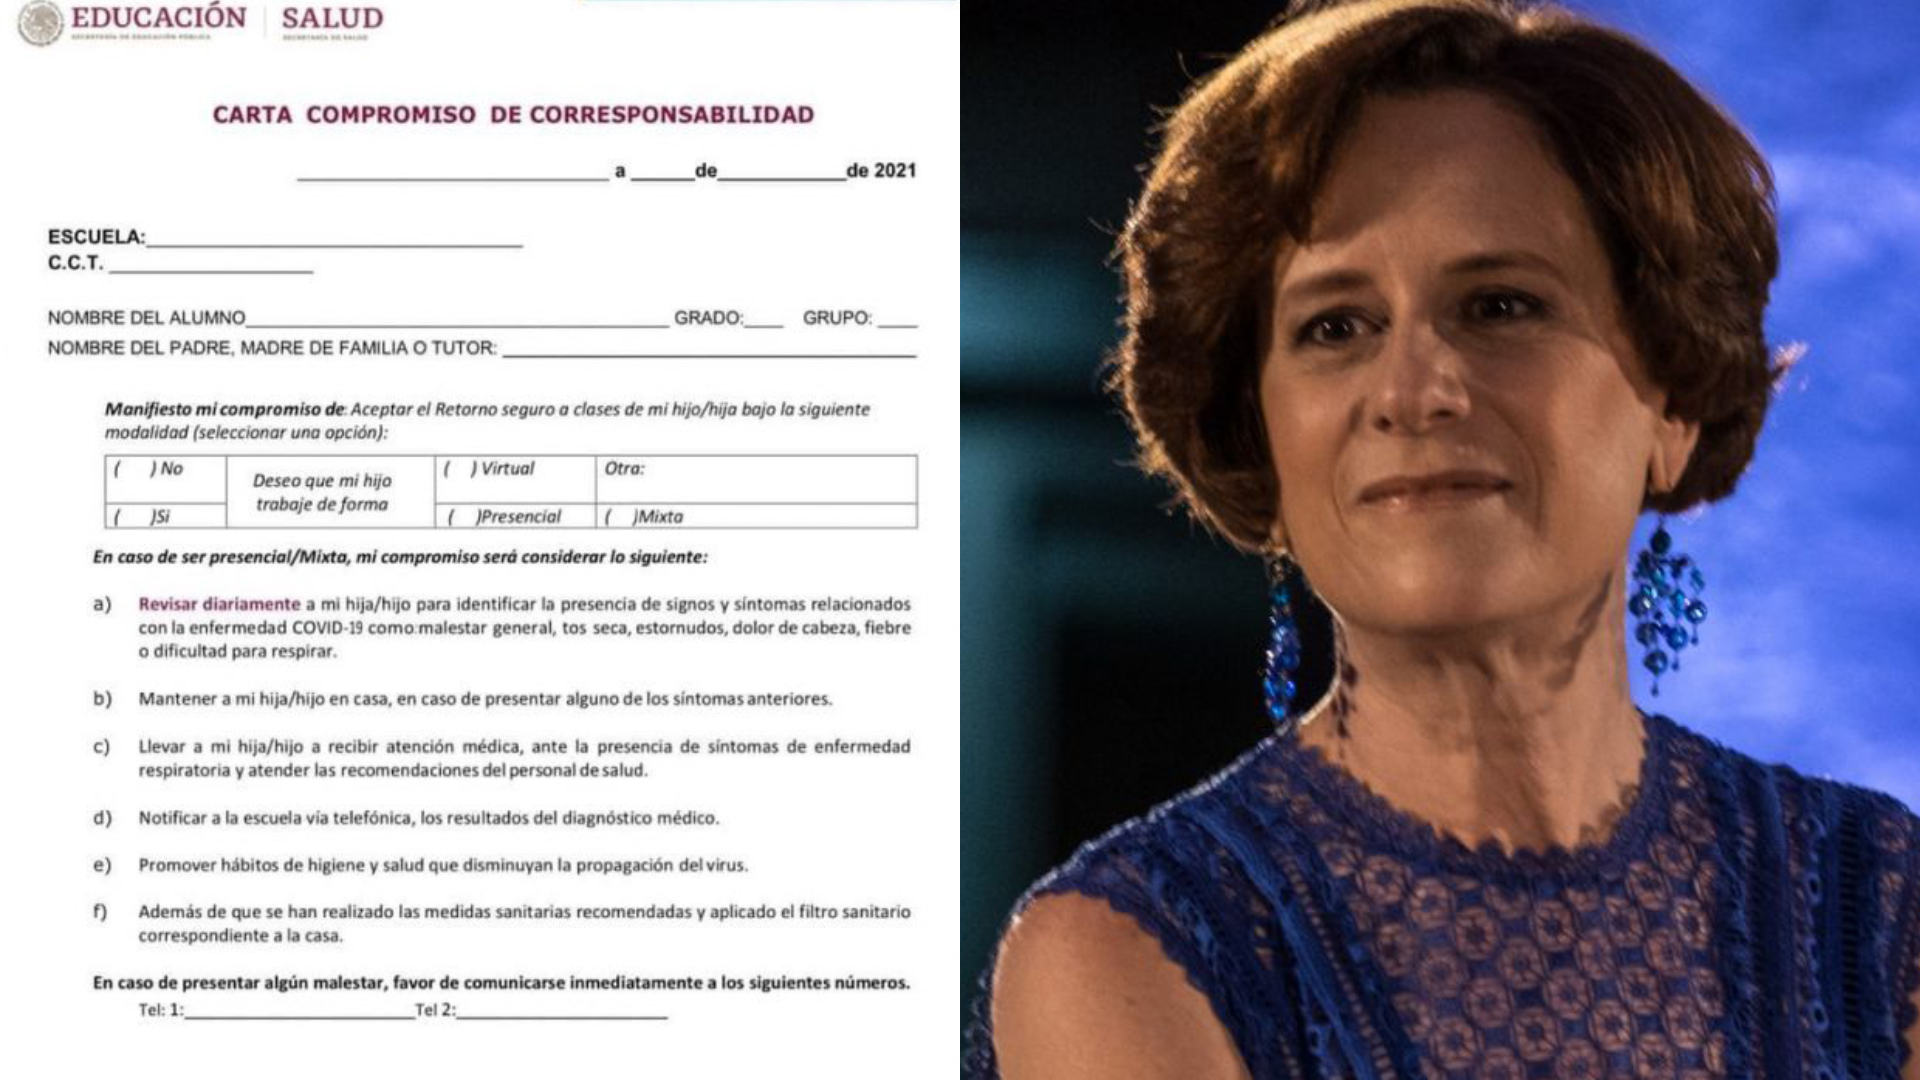 “Atentamente, Delfina Pilatos”: Denise Dresser criticó la carta de corresponsabilidad de la SEP